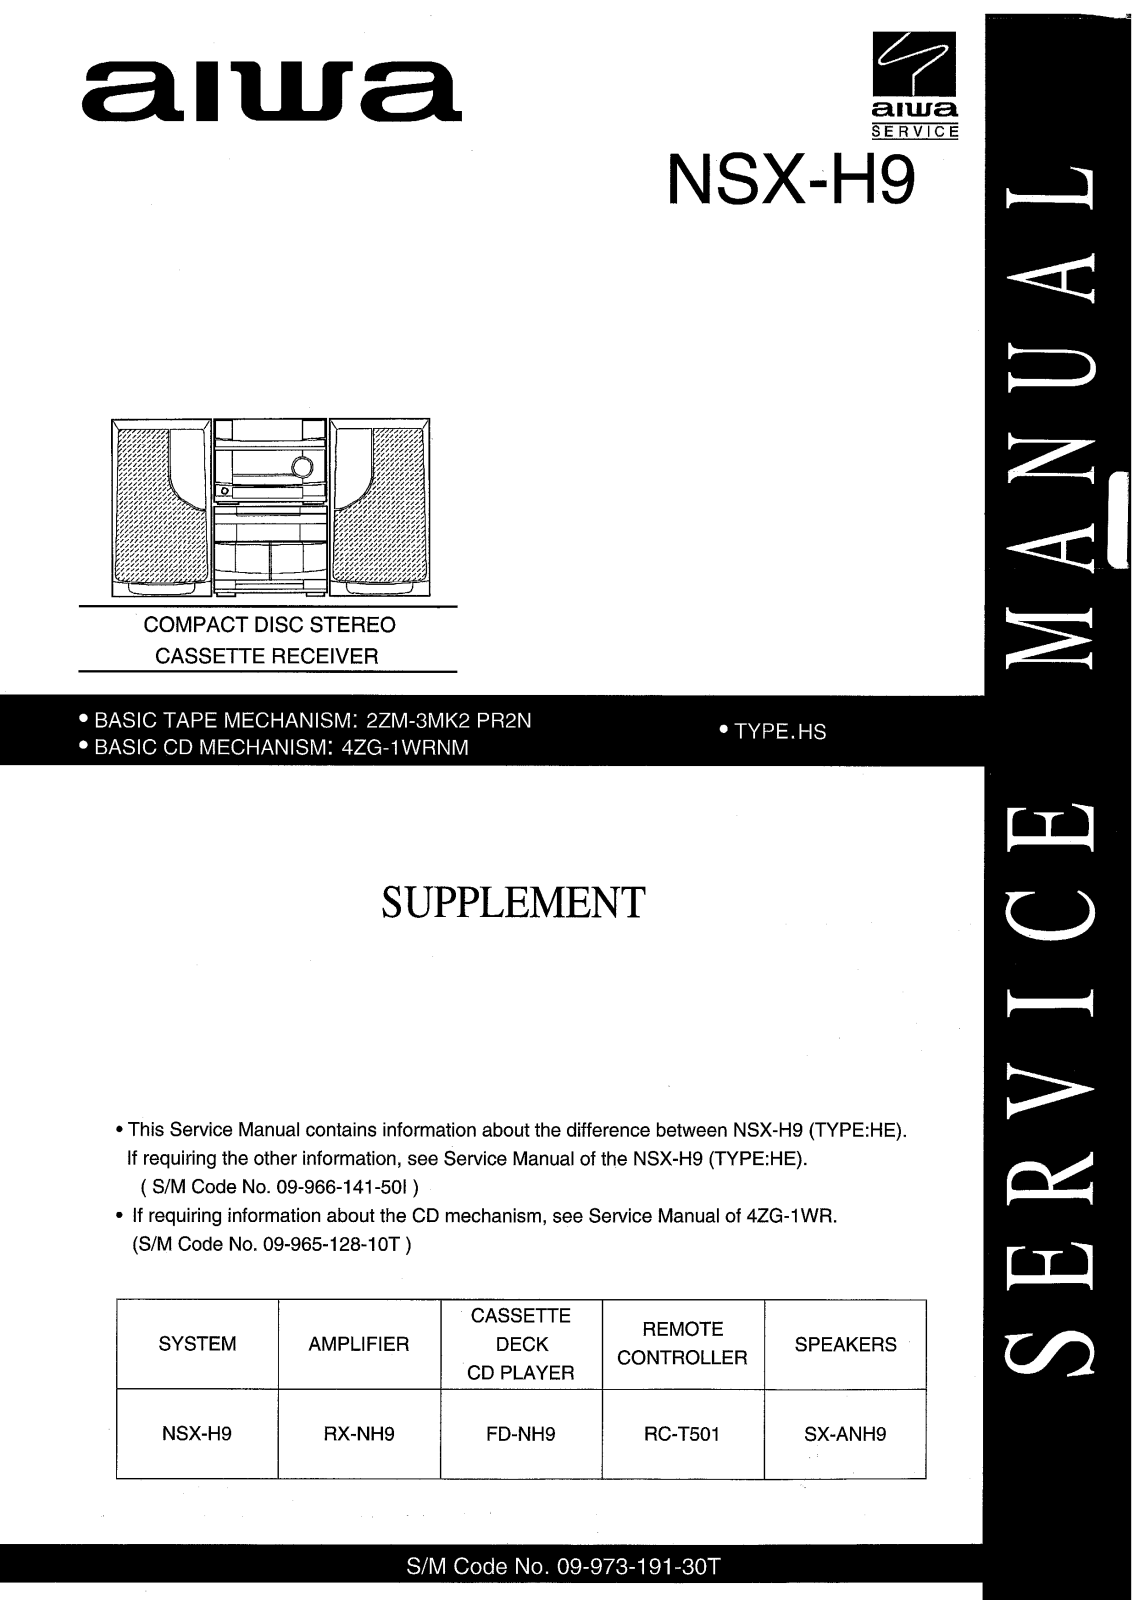 Aiwa NSX-H9 Service Manual hs